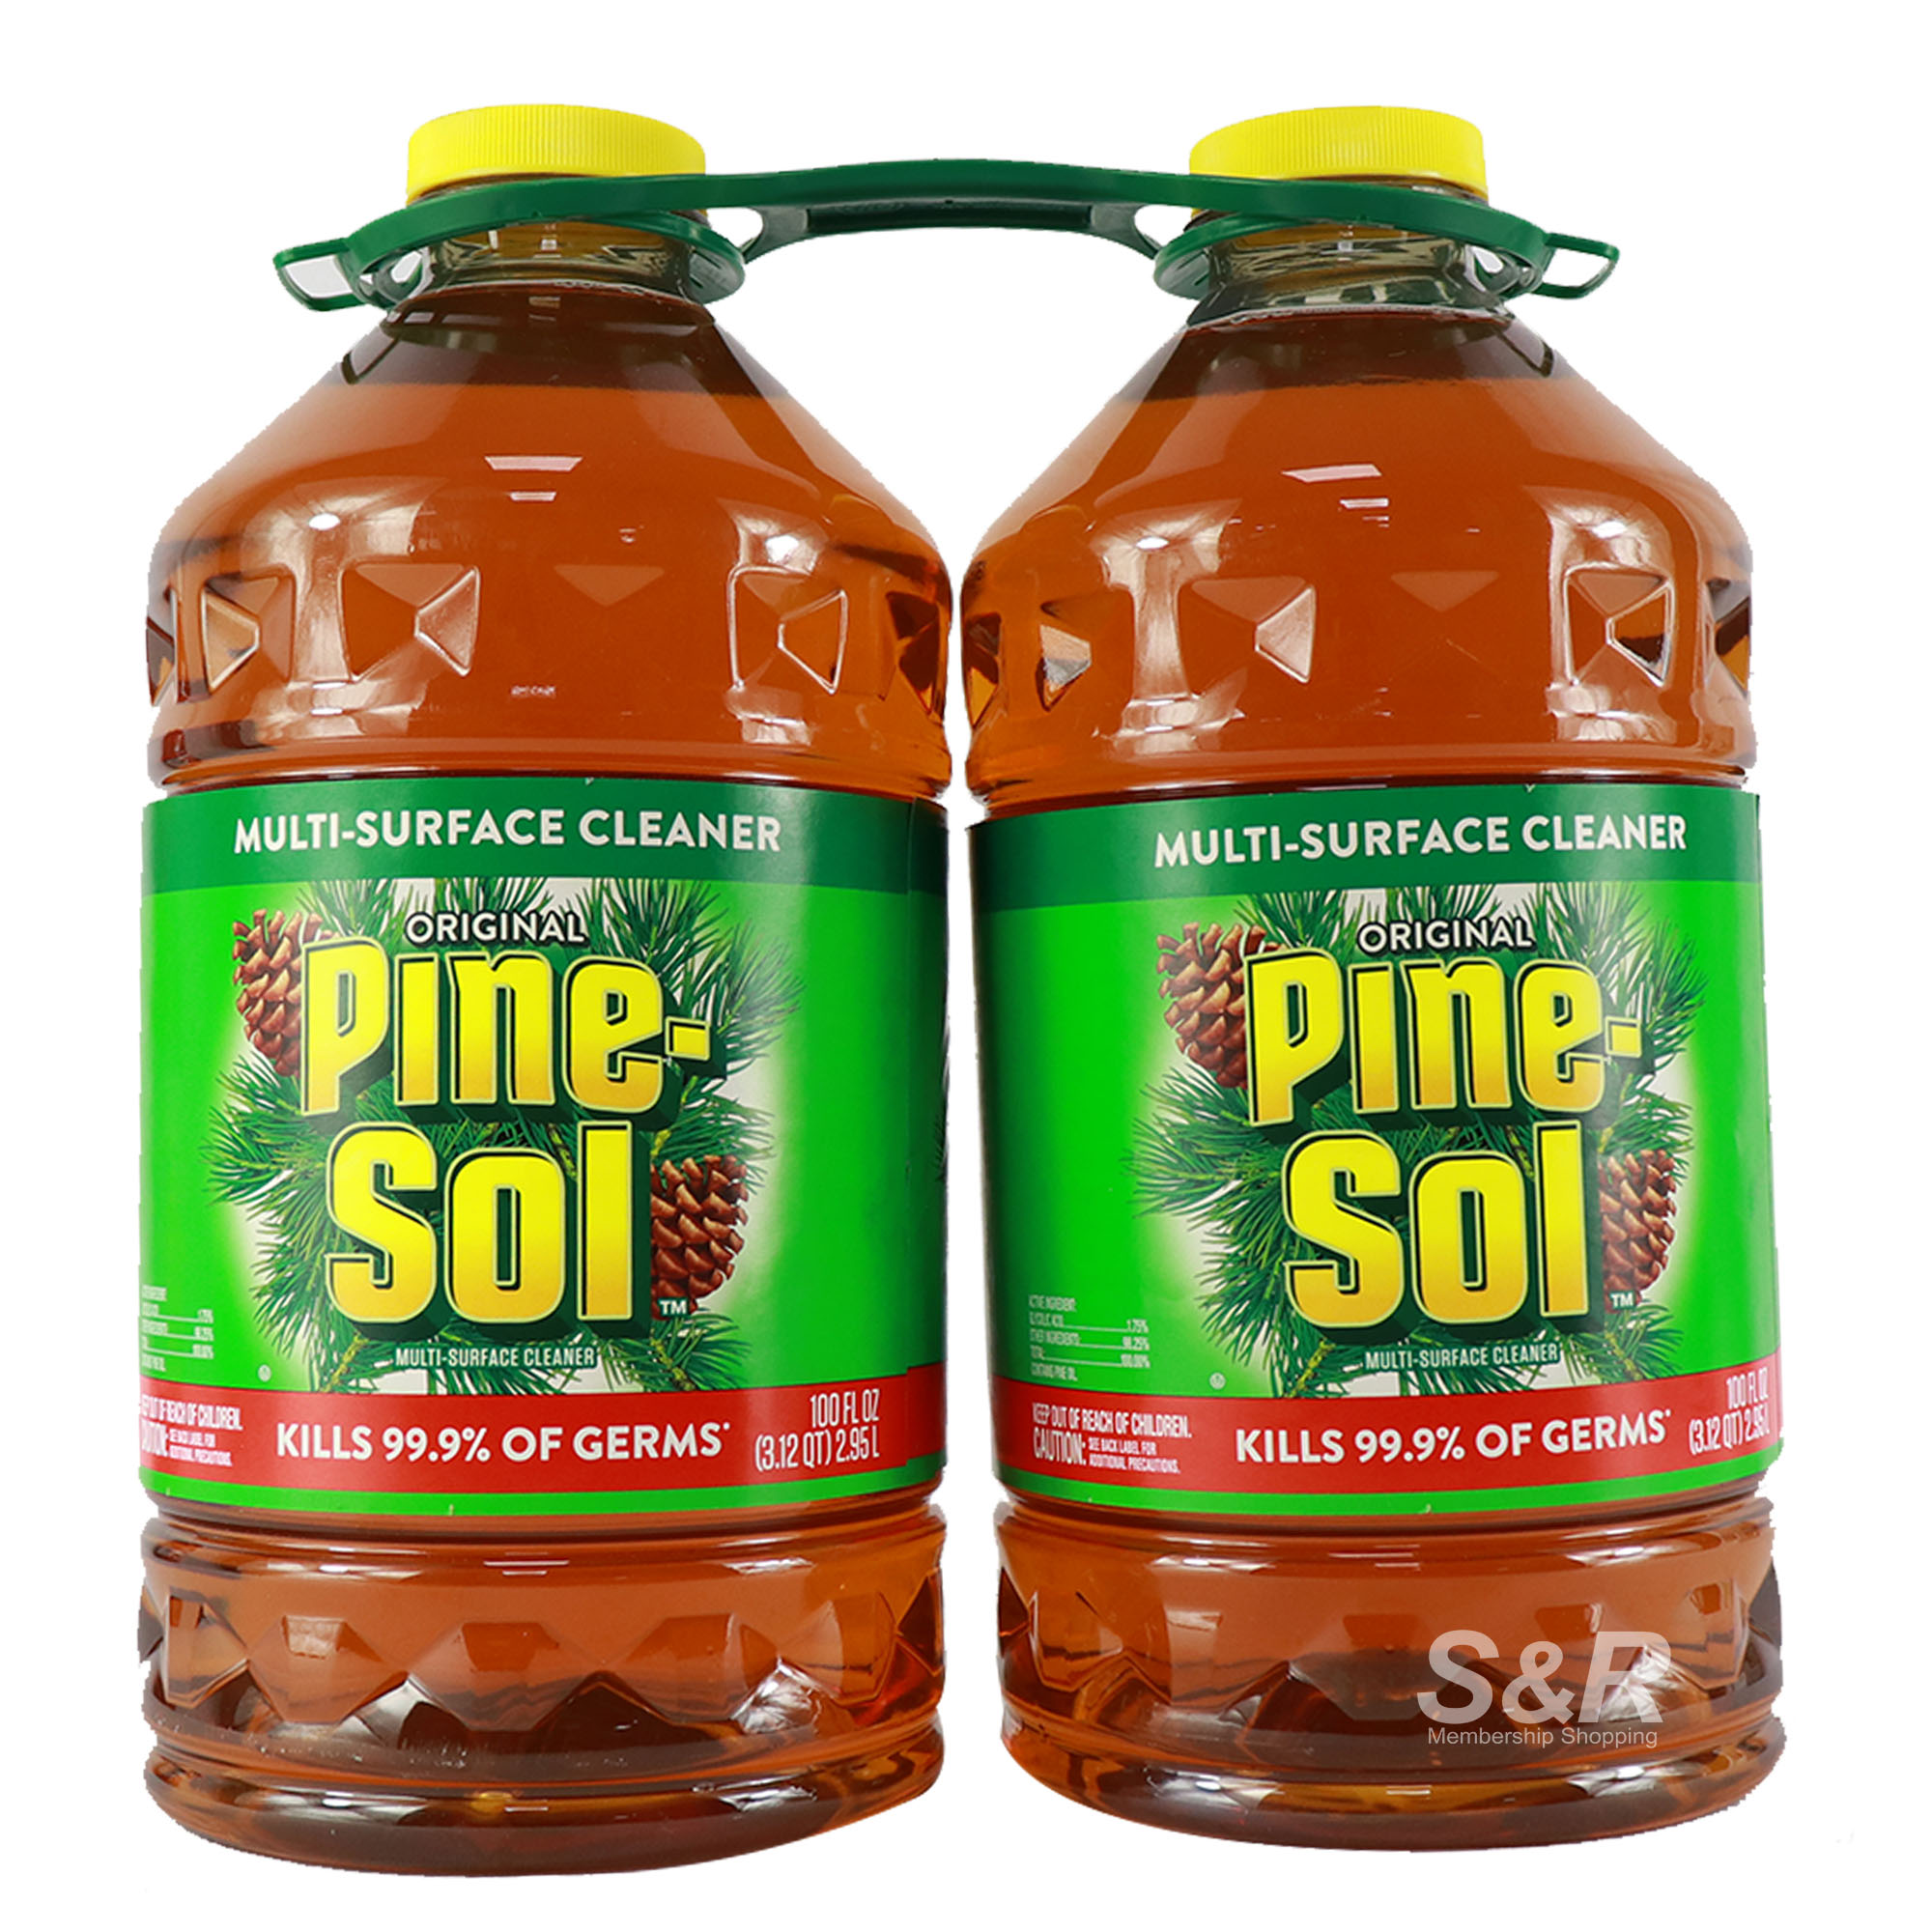 Pine-Sol Original Multi-Surface Cleaner 2pcs